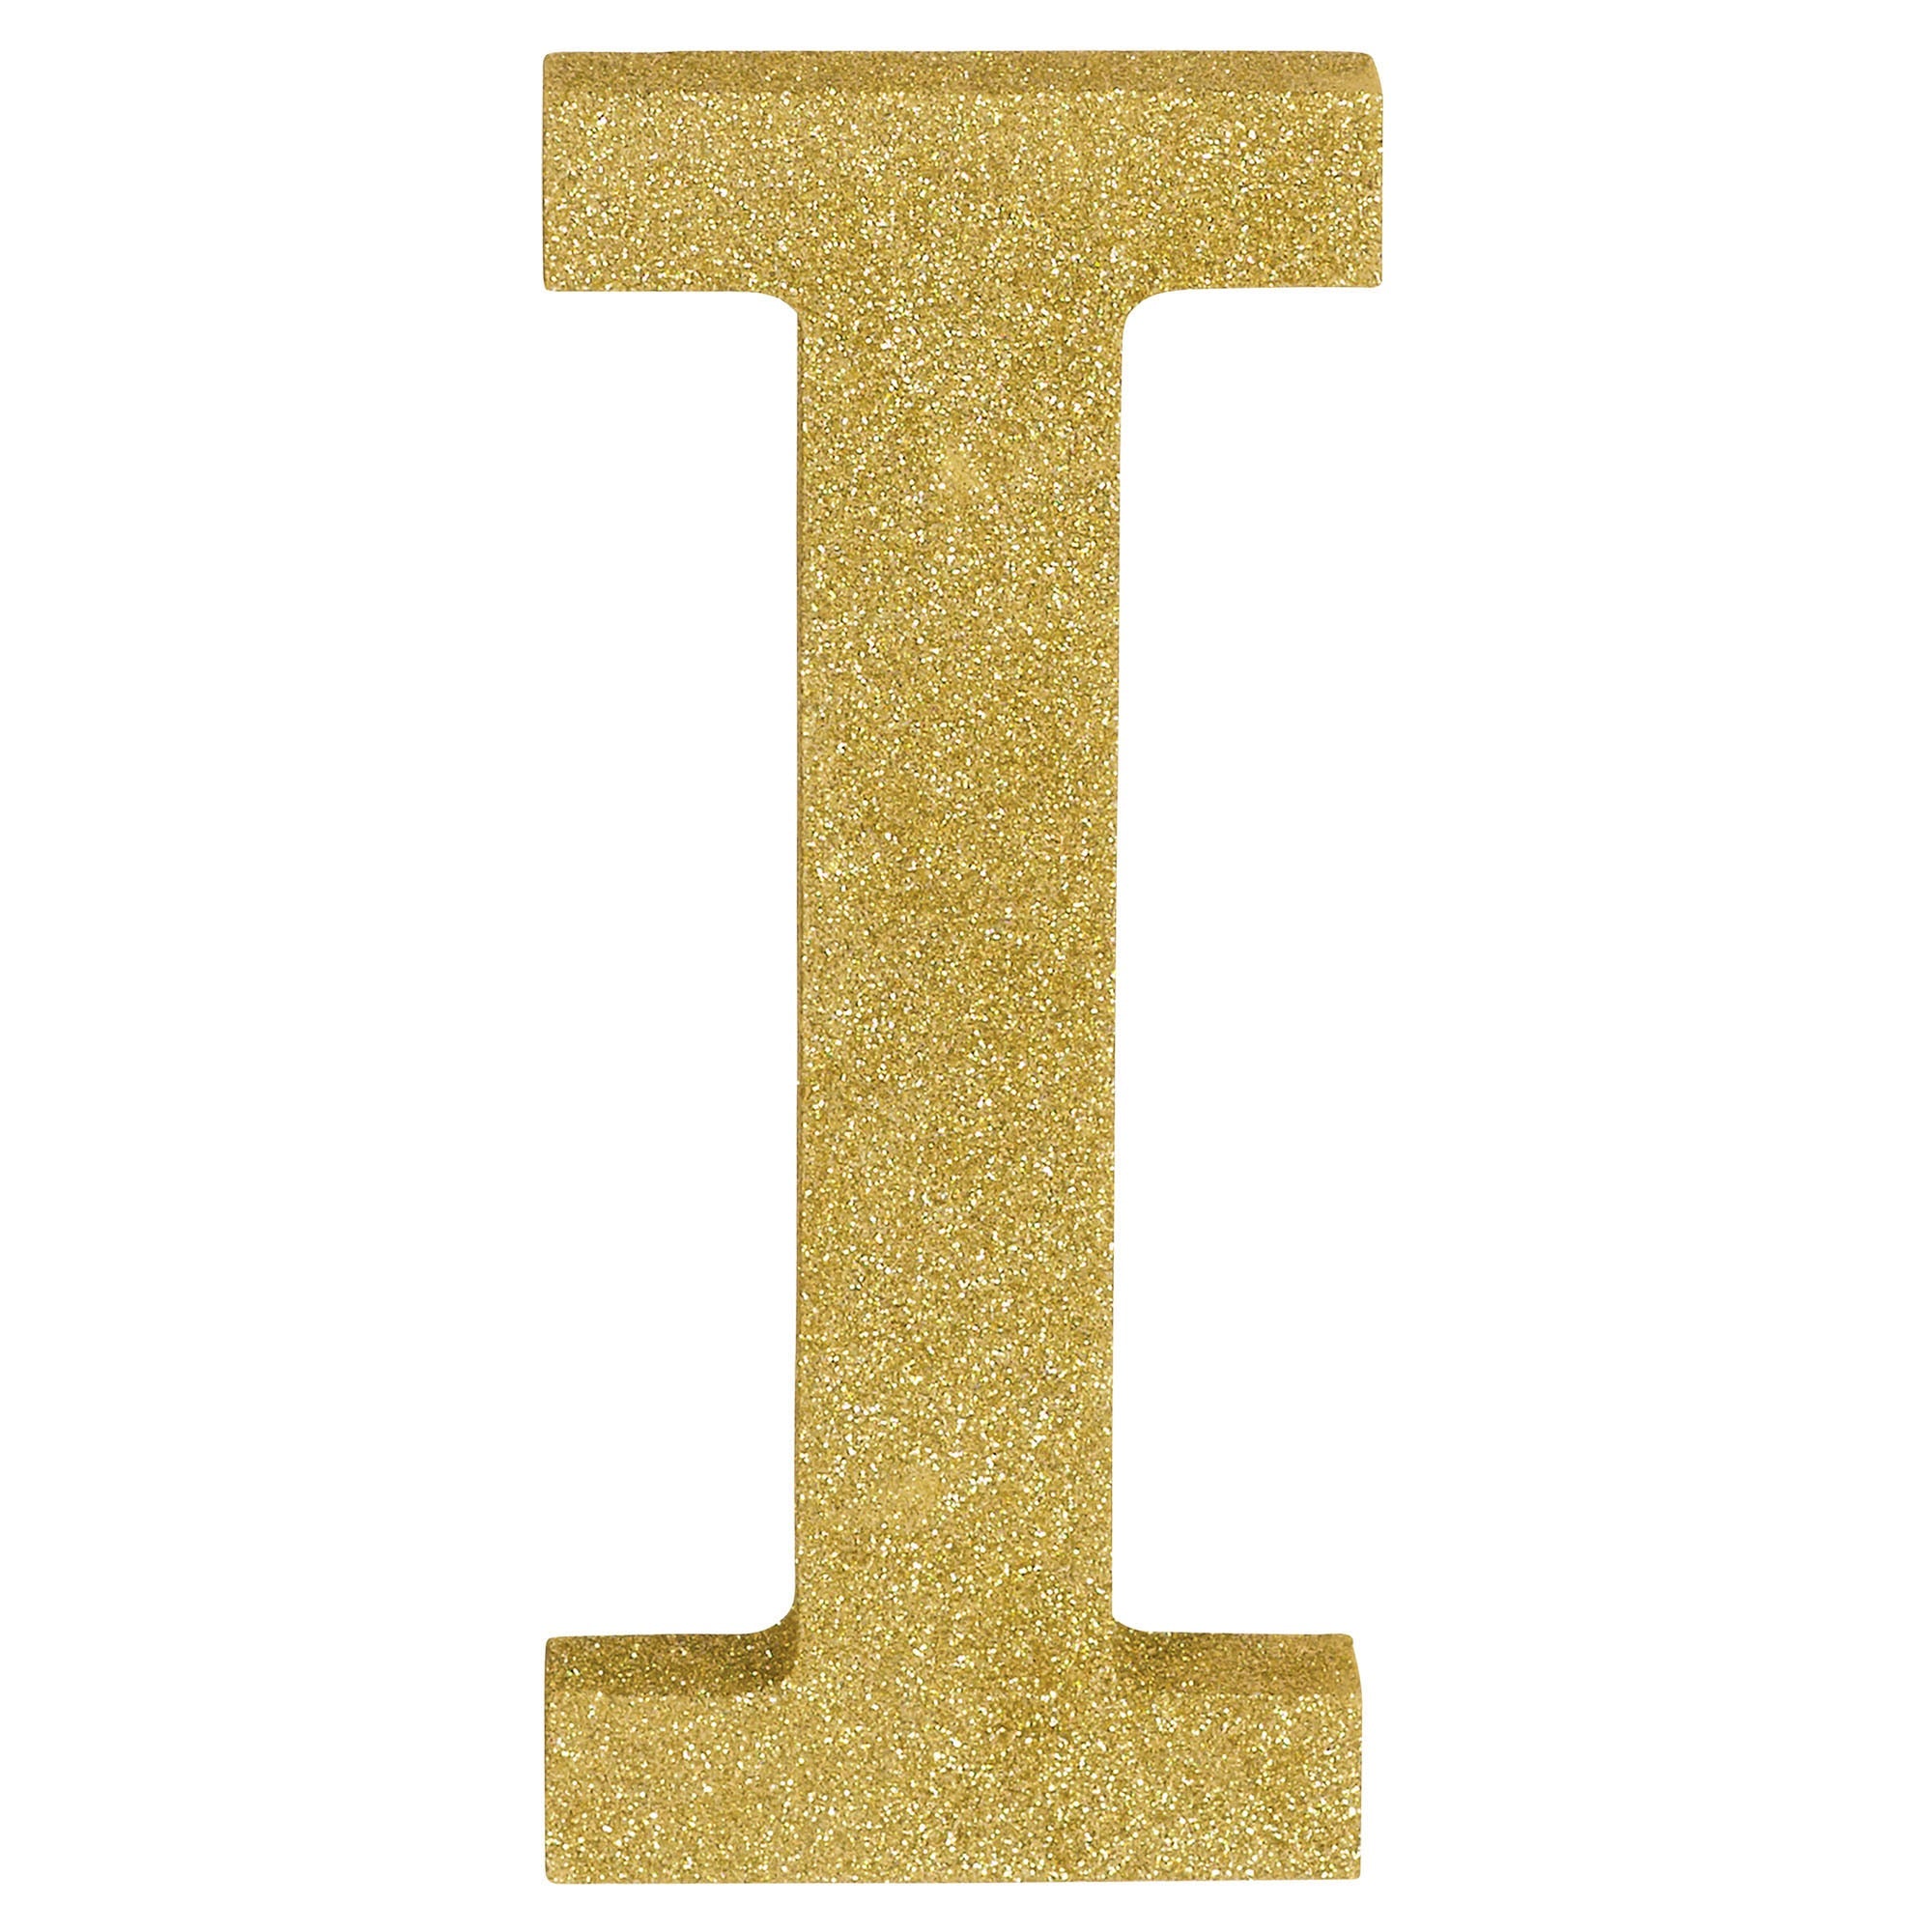 Letter I Glitter MDF Decoration  Gold  8.875x3.875x1in
